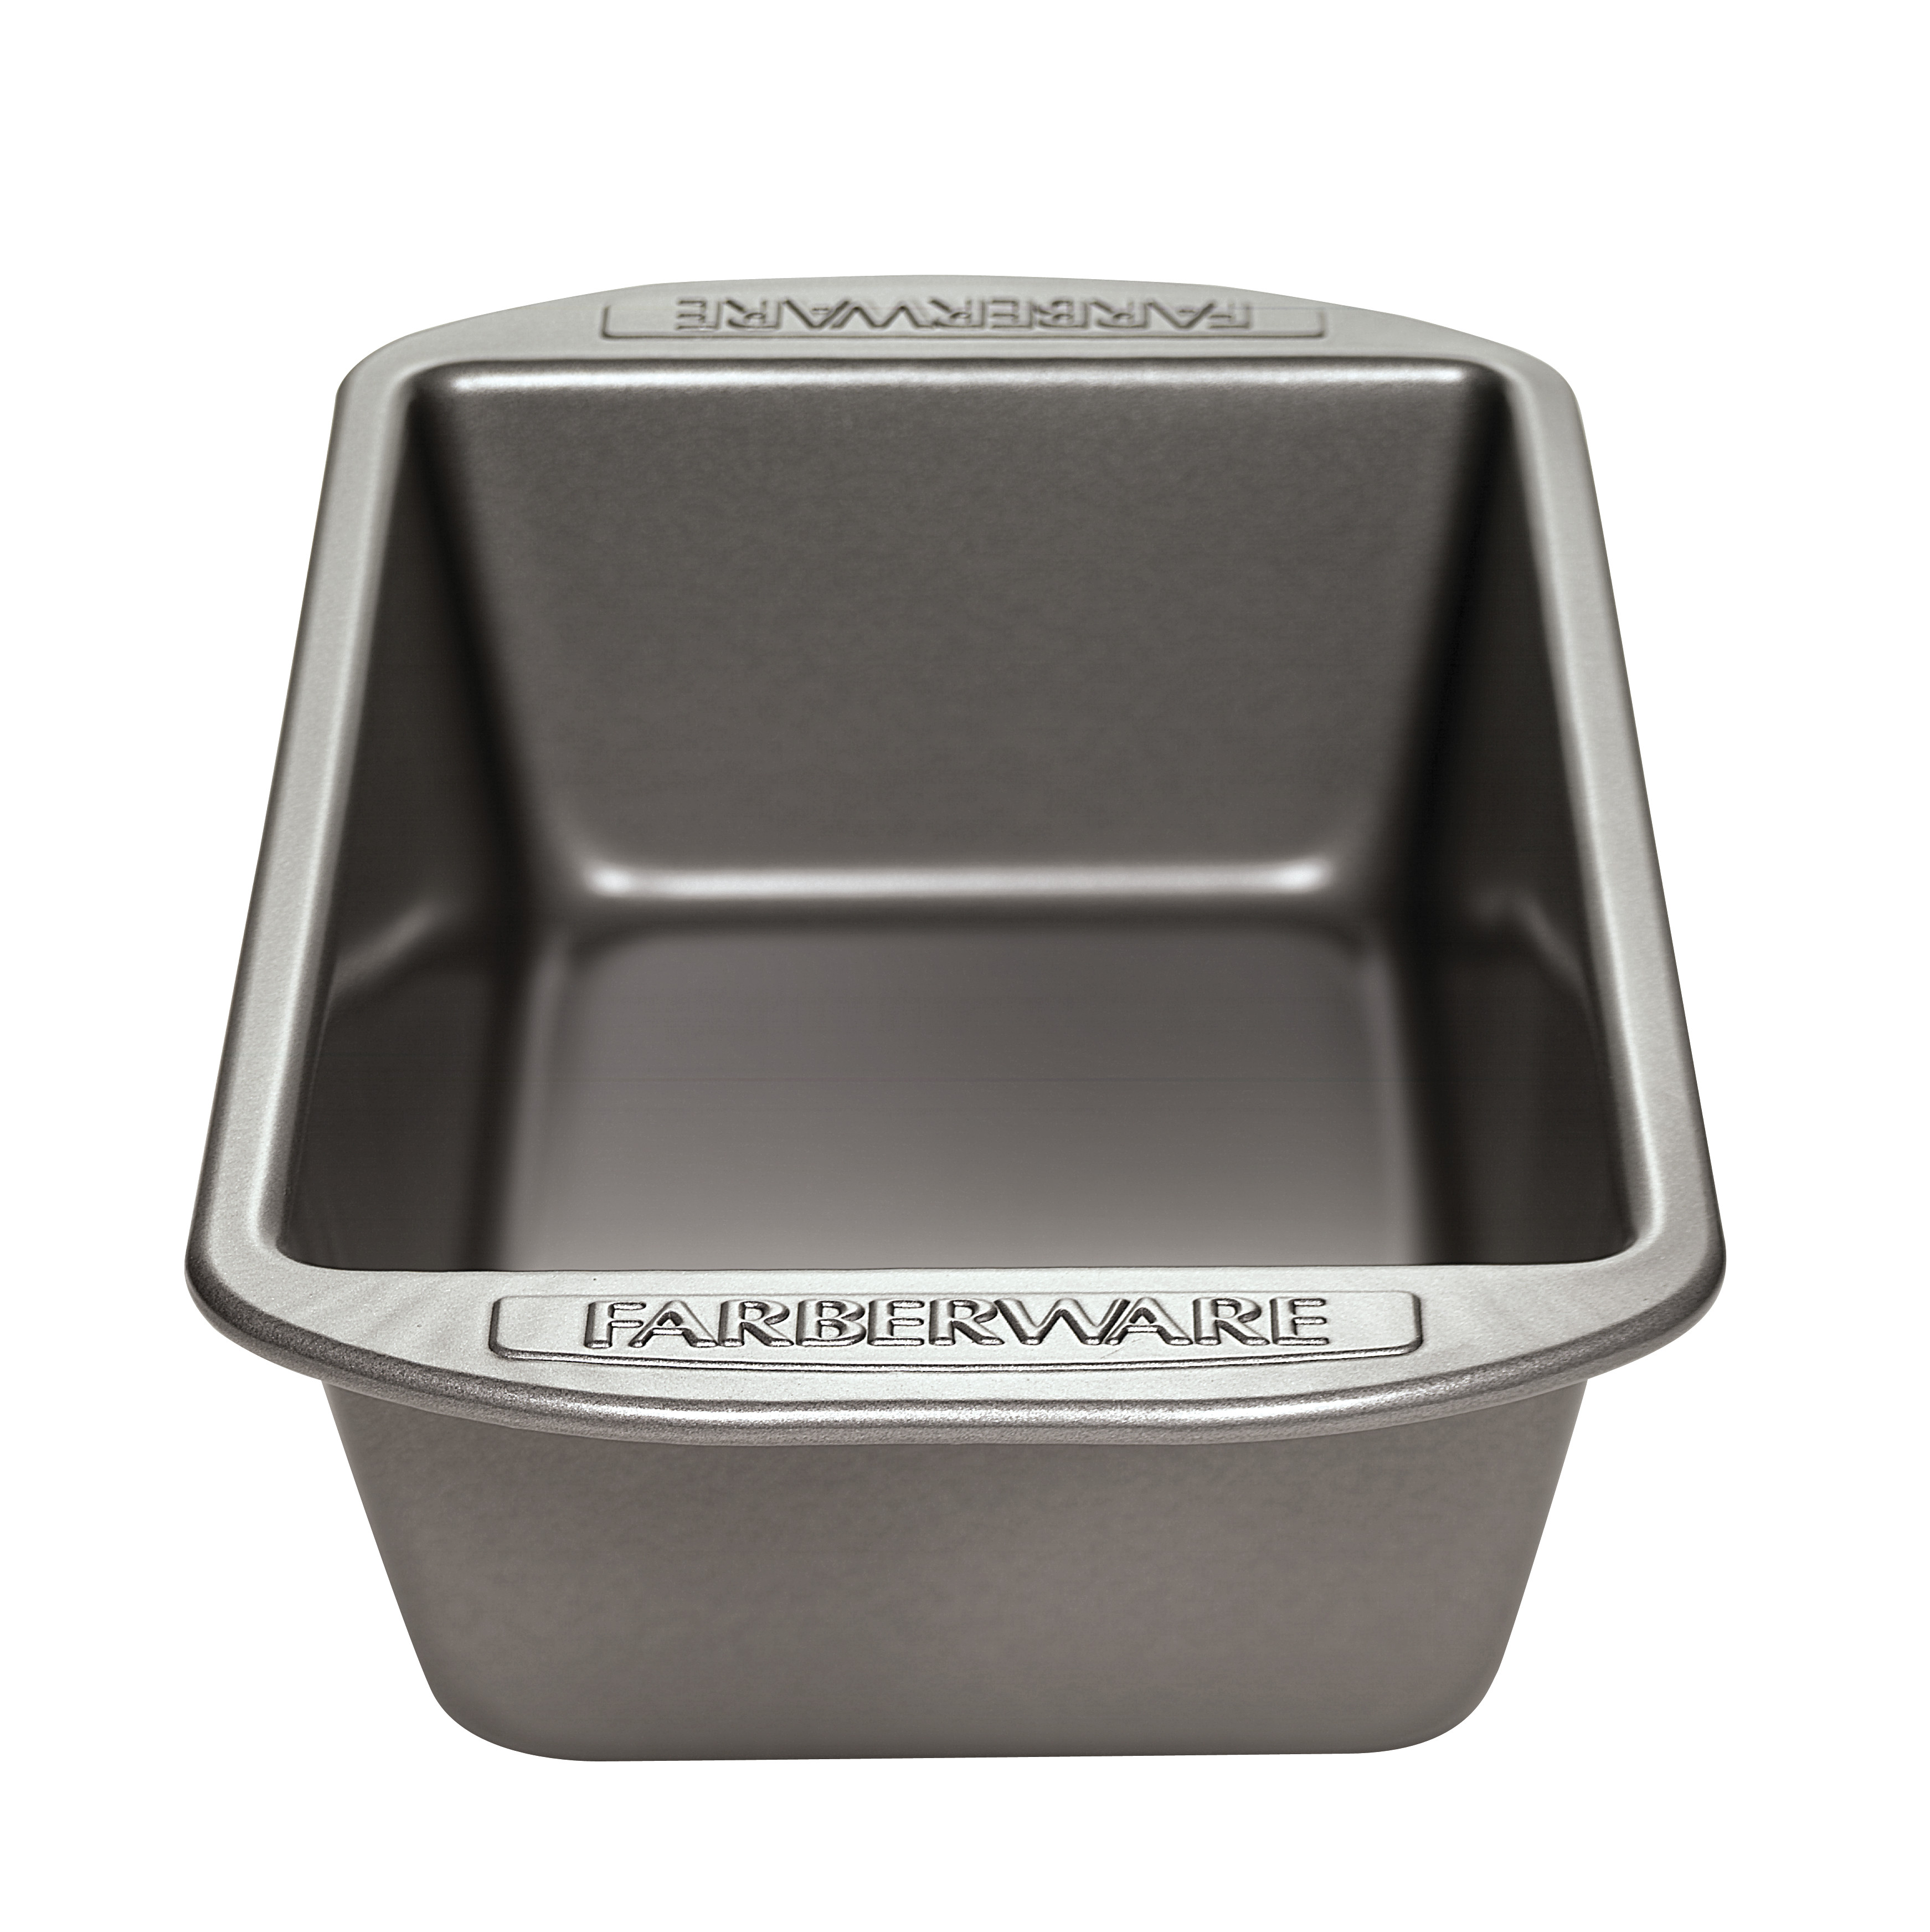 Farberware 9-Inch x 5-Inch Nonstick Bakeware Loaf Pan, Gray - image 1 of 8